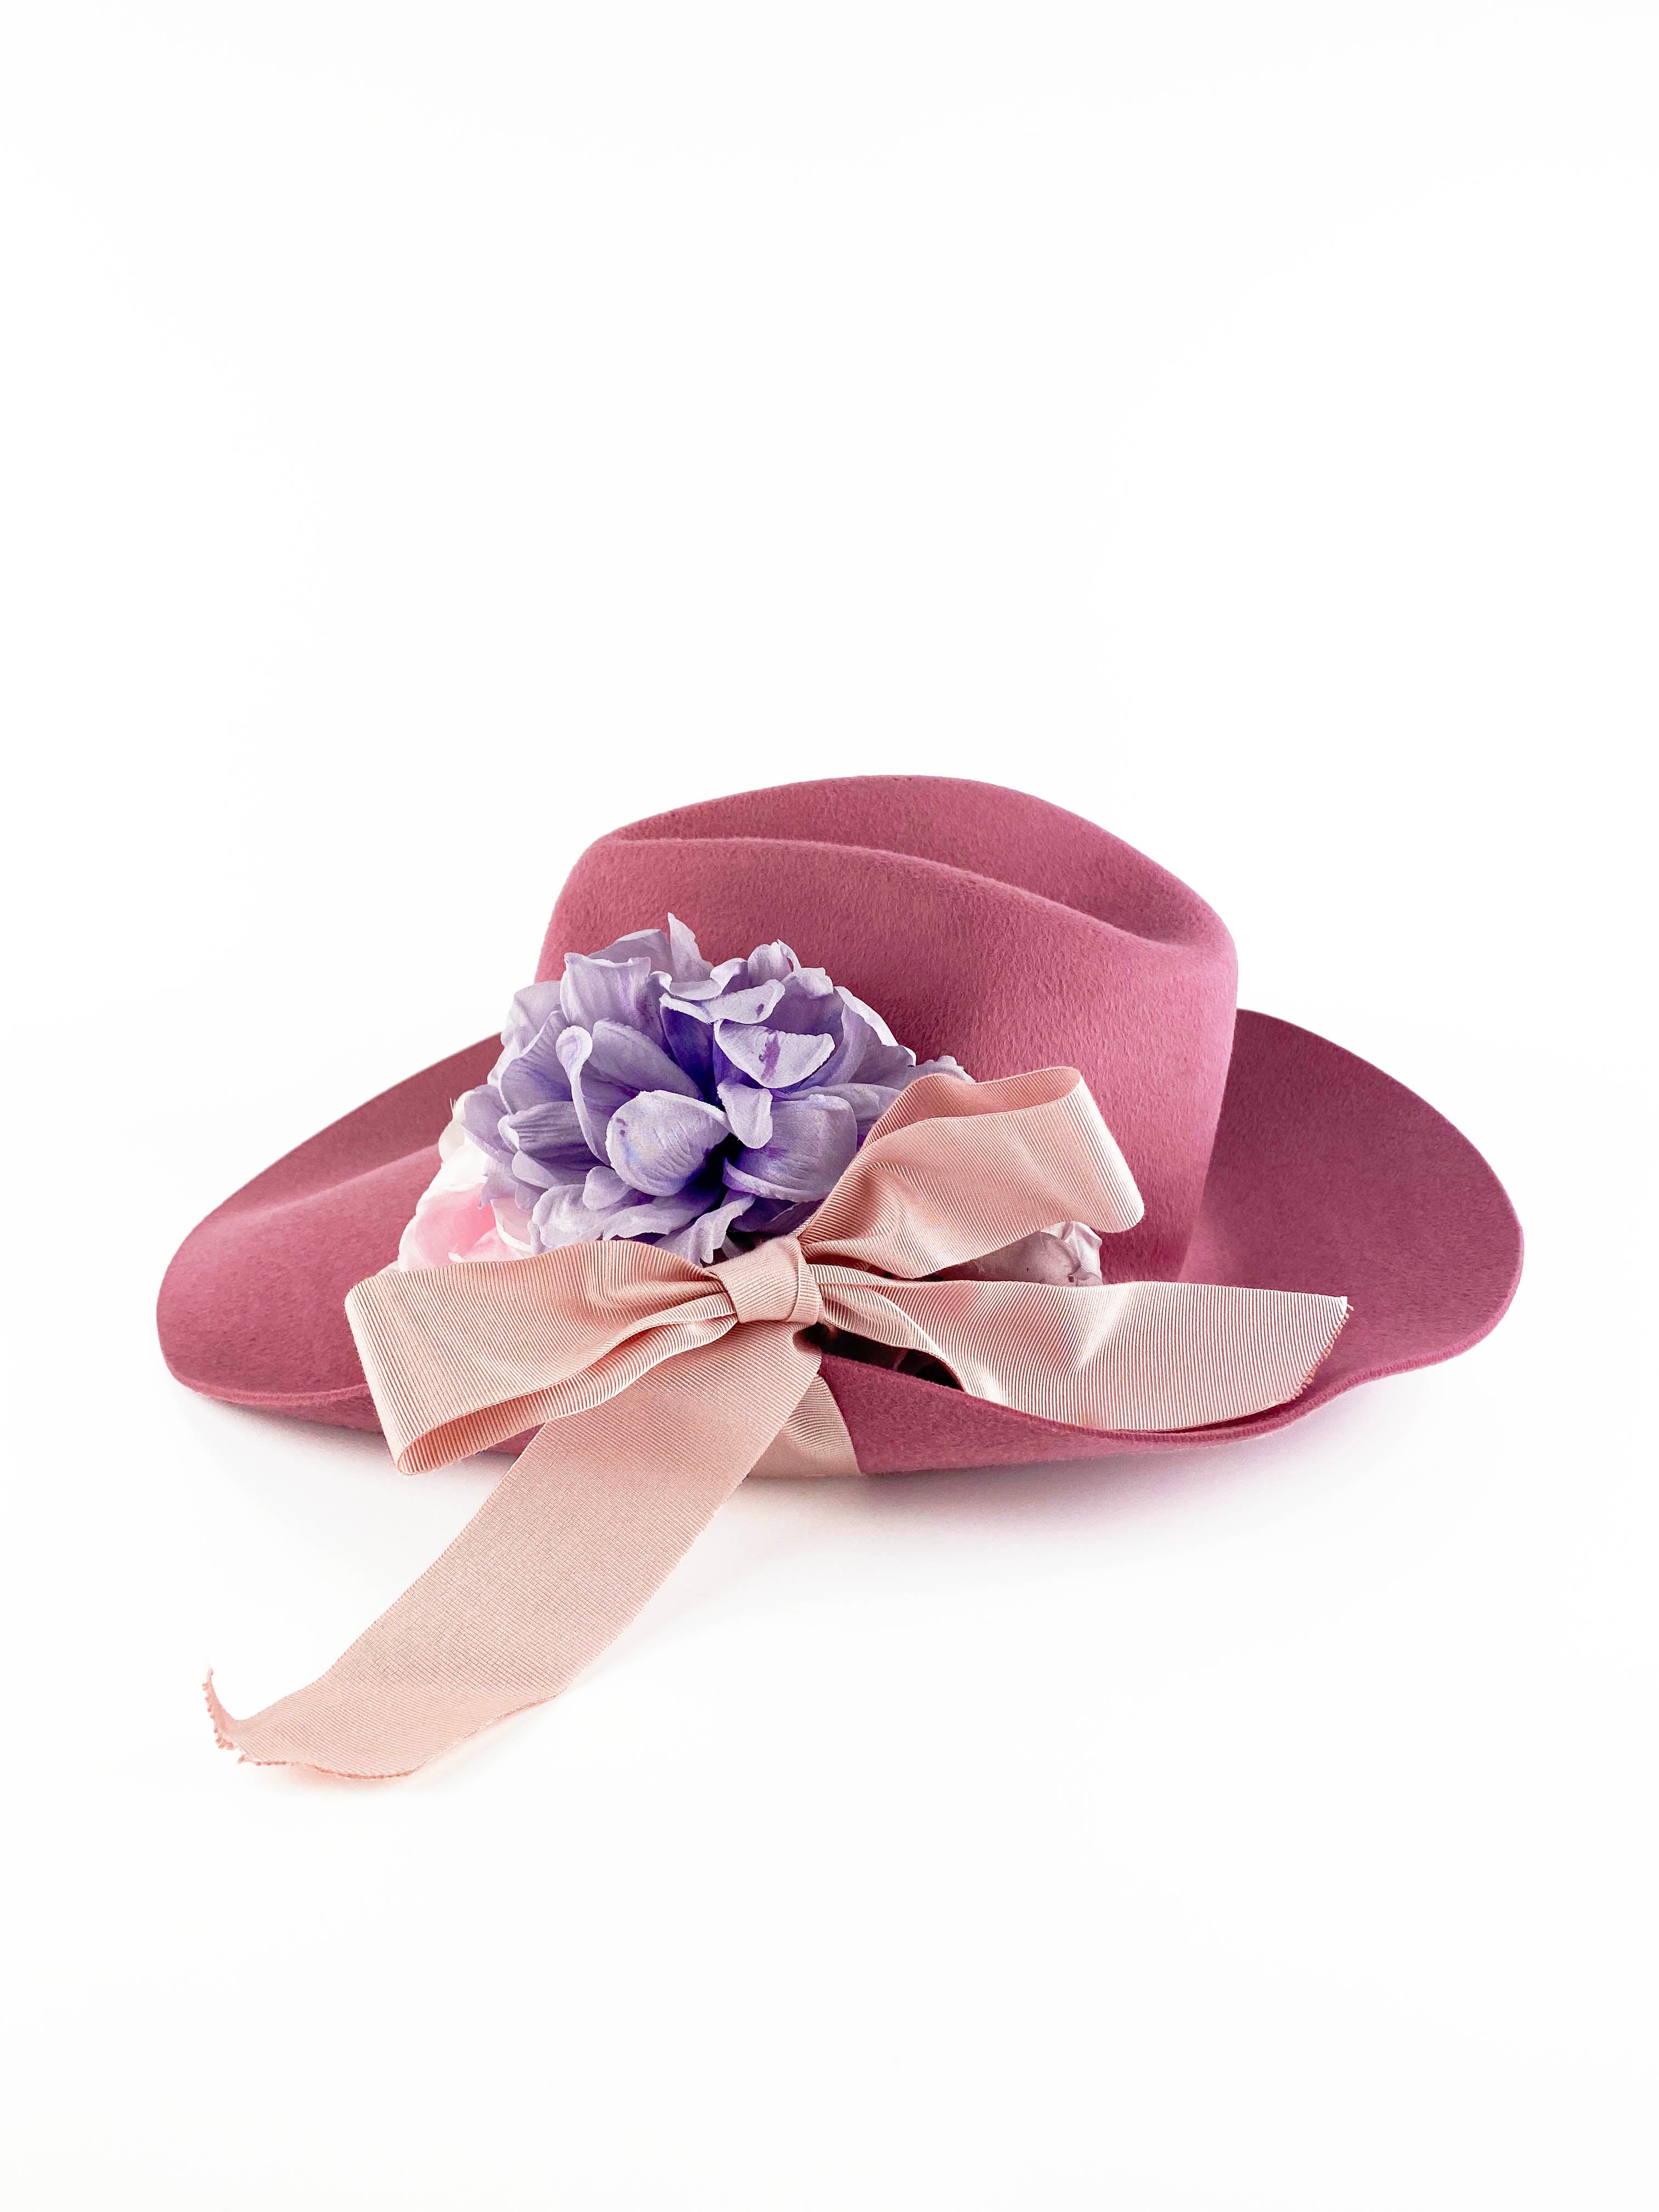 gucci-pink-hat-2.jpg